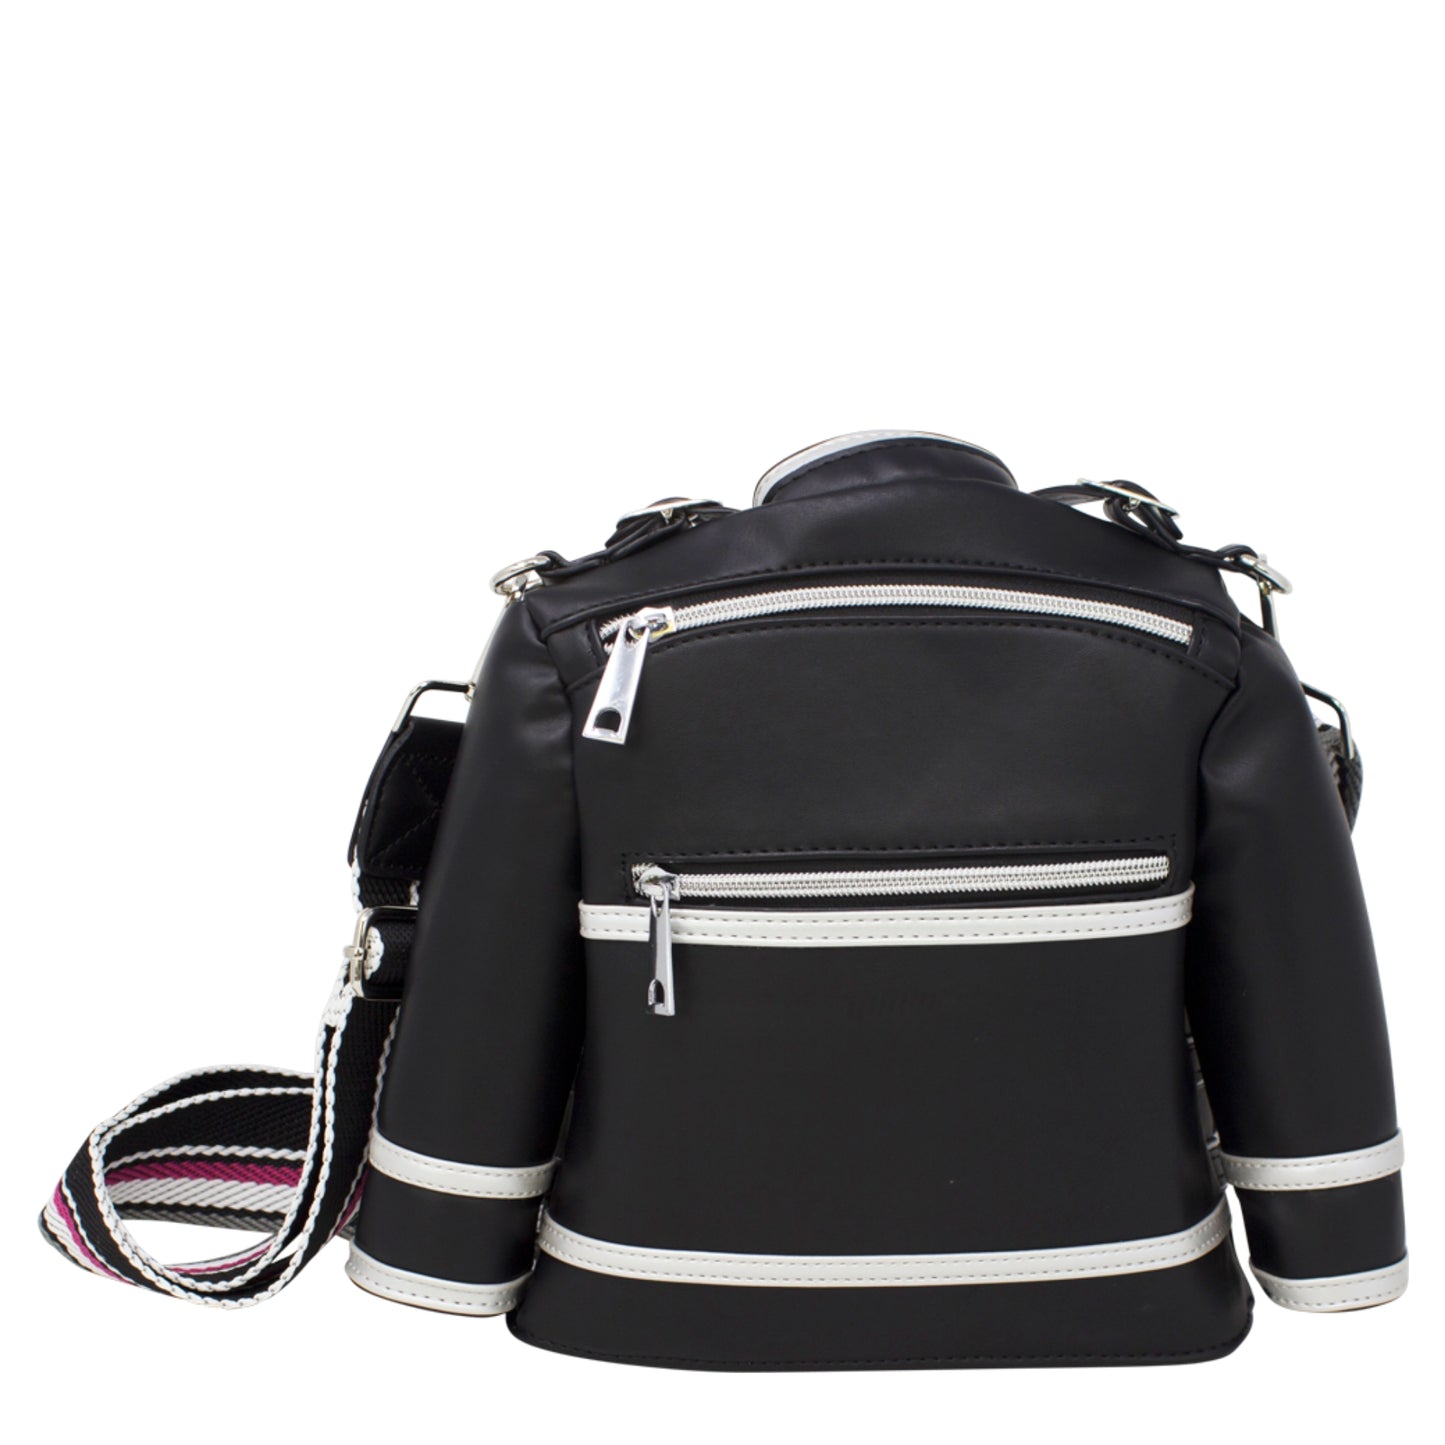 Black Military-style tunic Inspired Rock n Roll Cross Body Bag